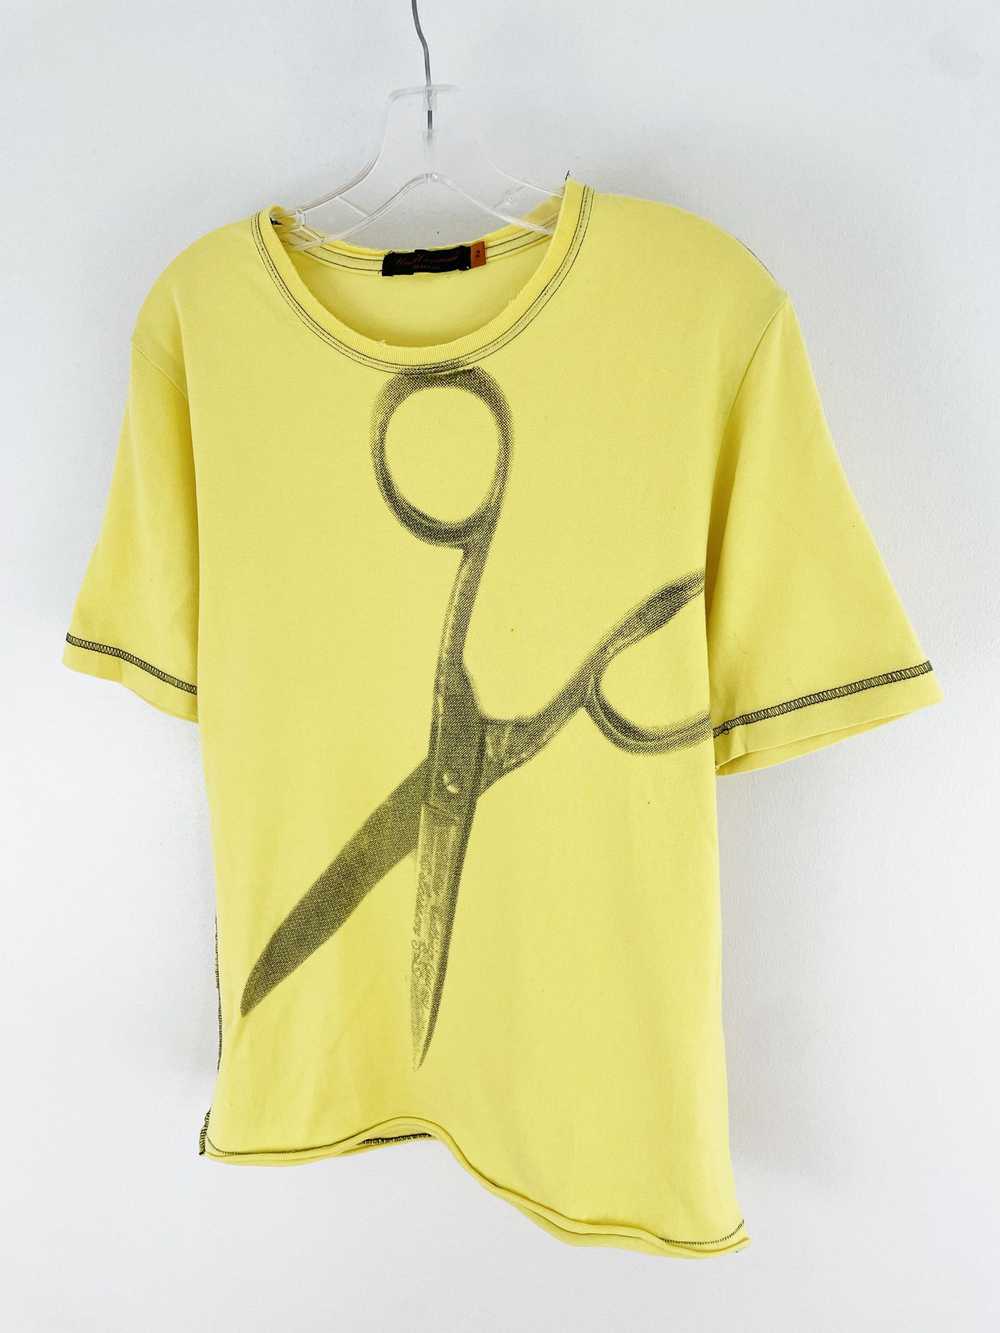 Undercover SS05 But Beautiful Scissors T-Shirt - image 2